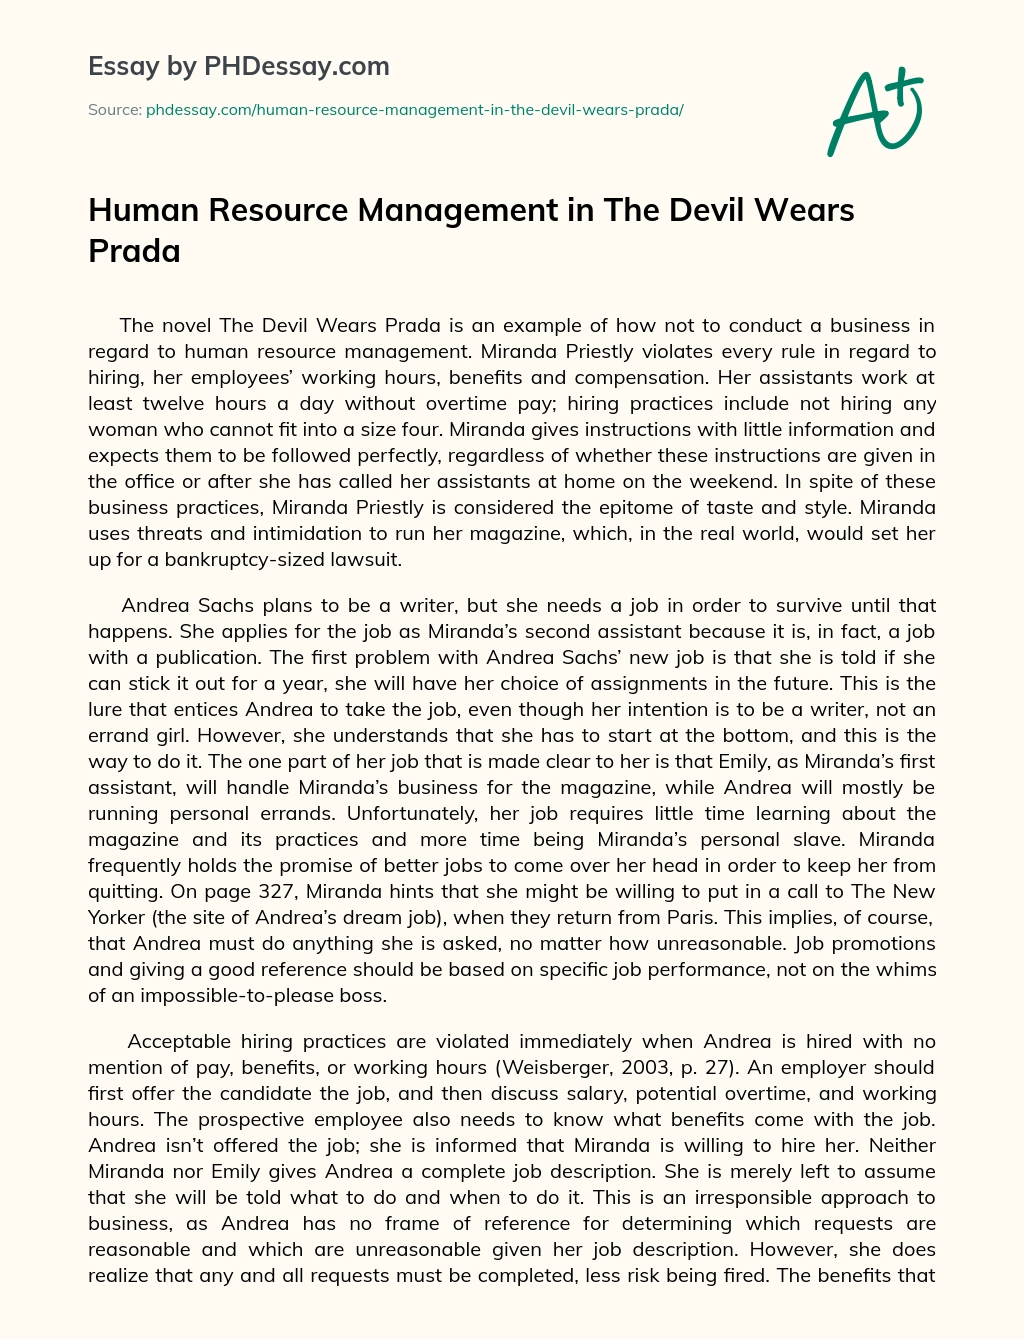 Human Resource Management in The Devil Wears Prada essay